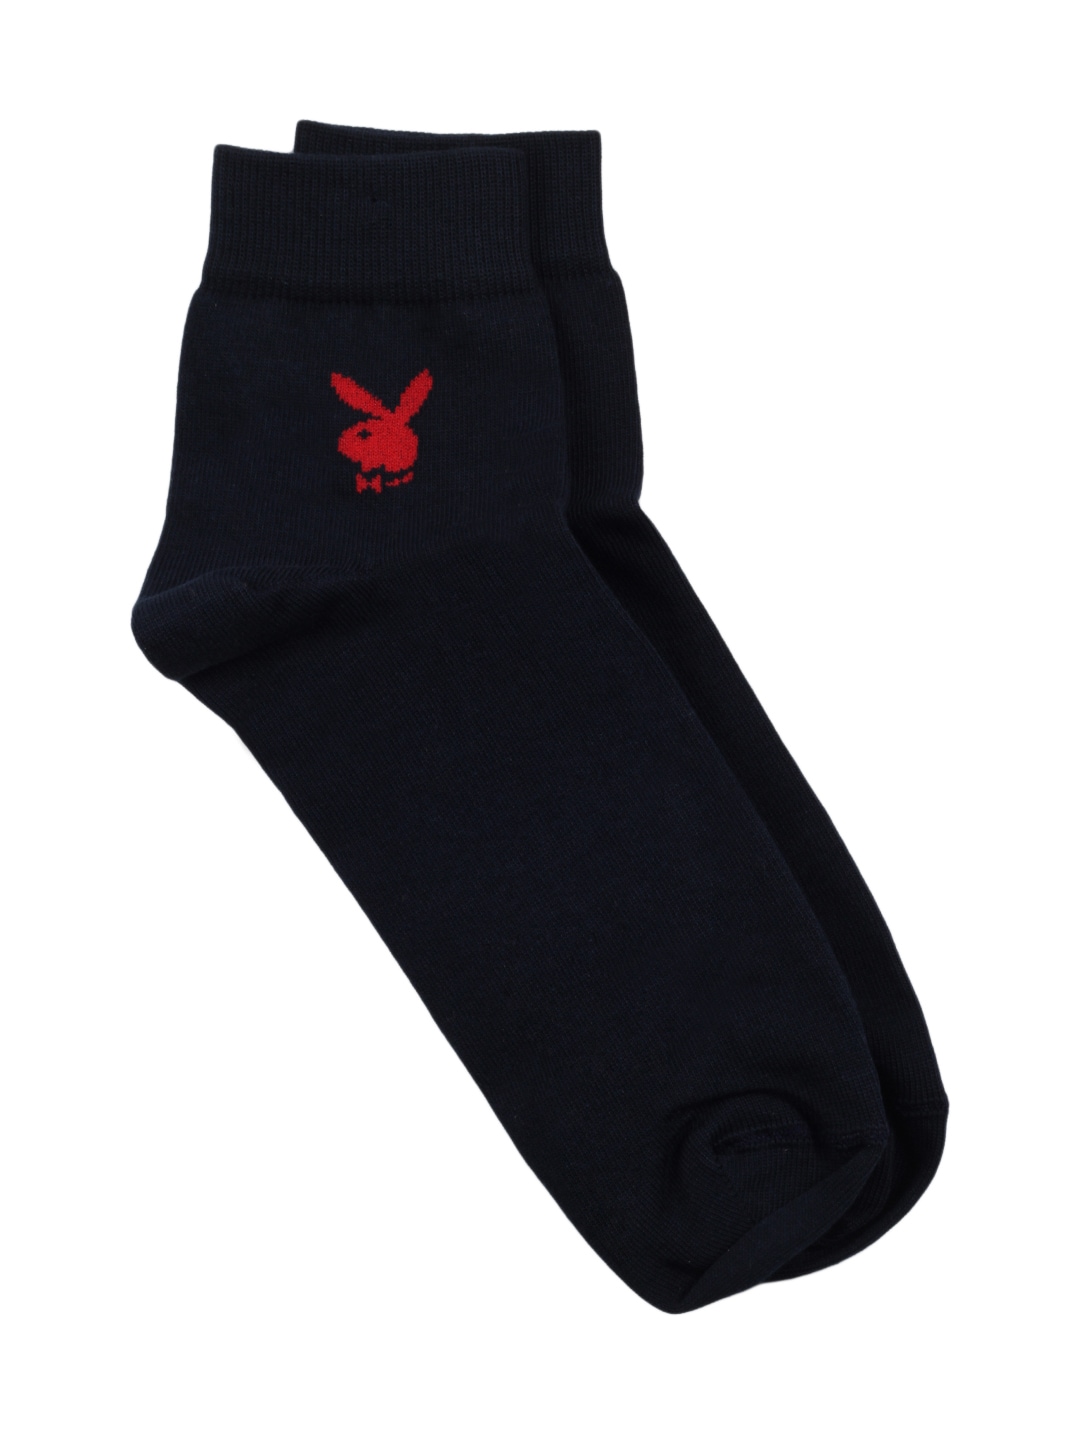 Playboy Men Navy Blue Socks